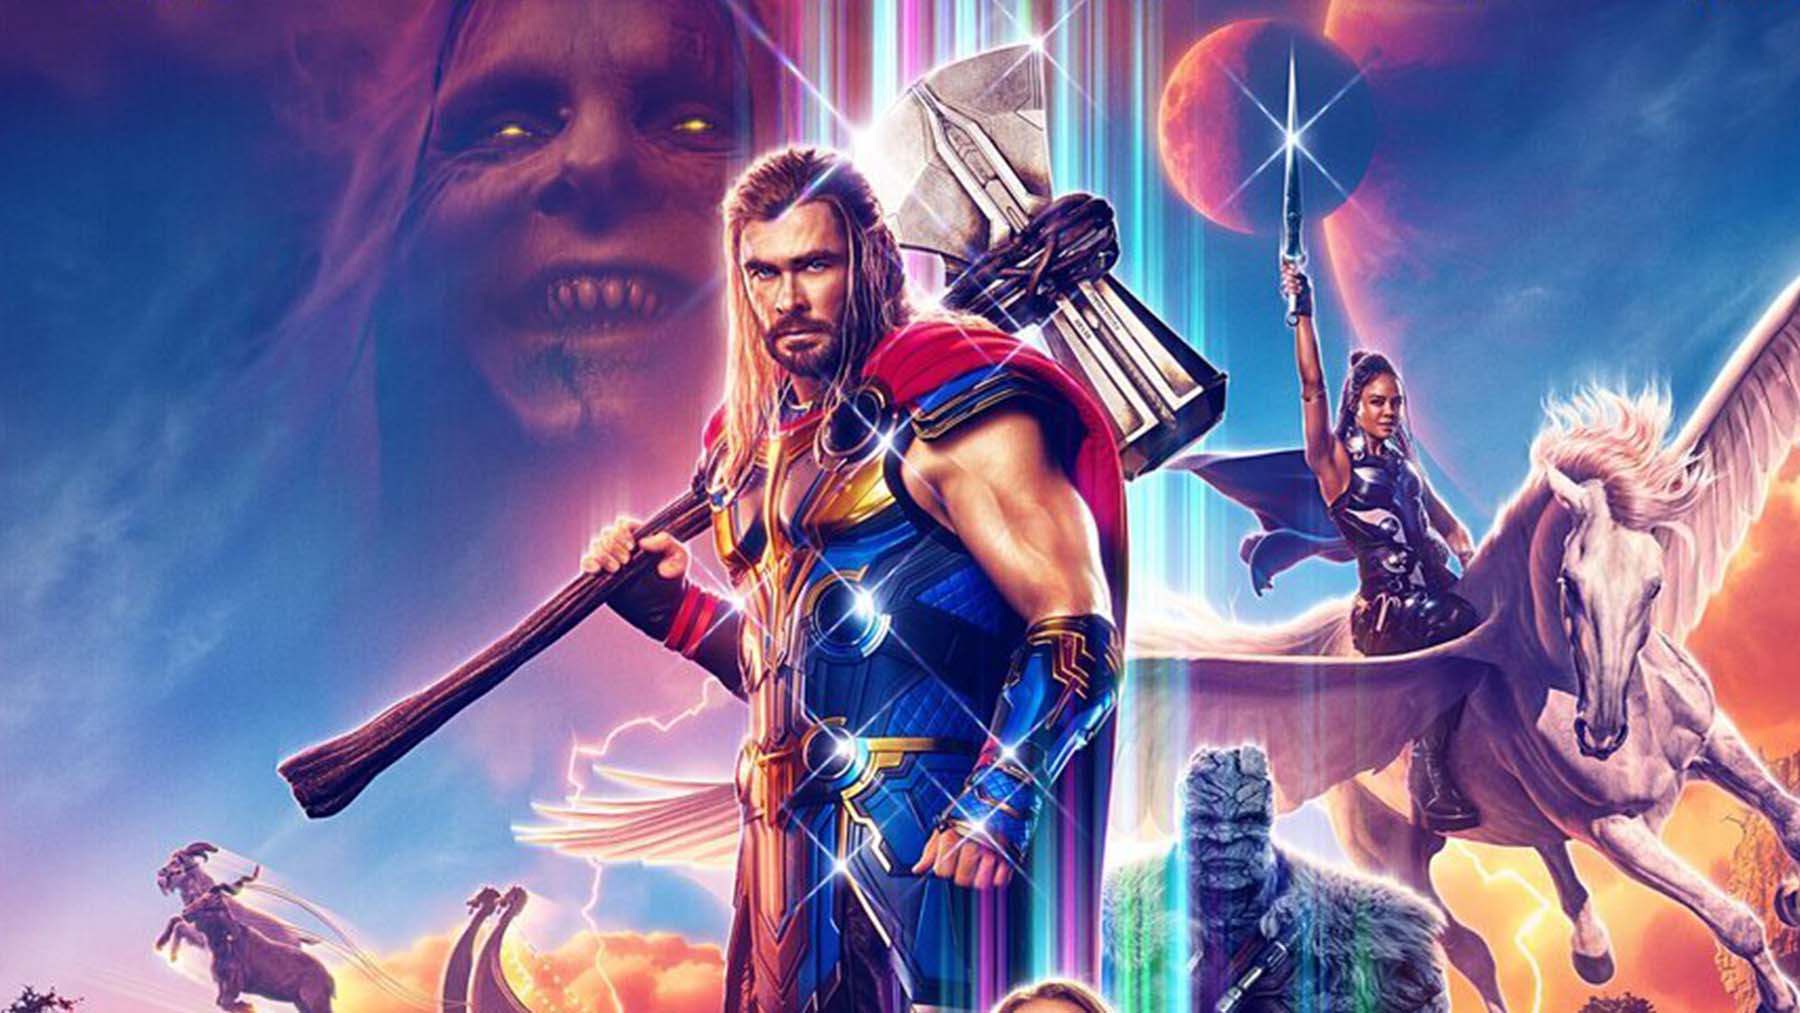 ‘Thor: Love and thunder’ (Marvel)